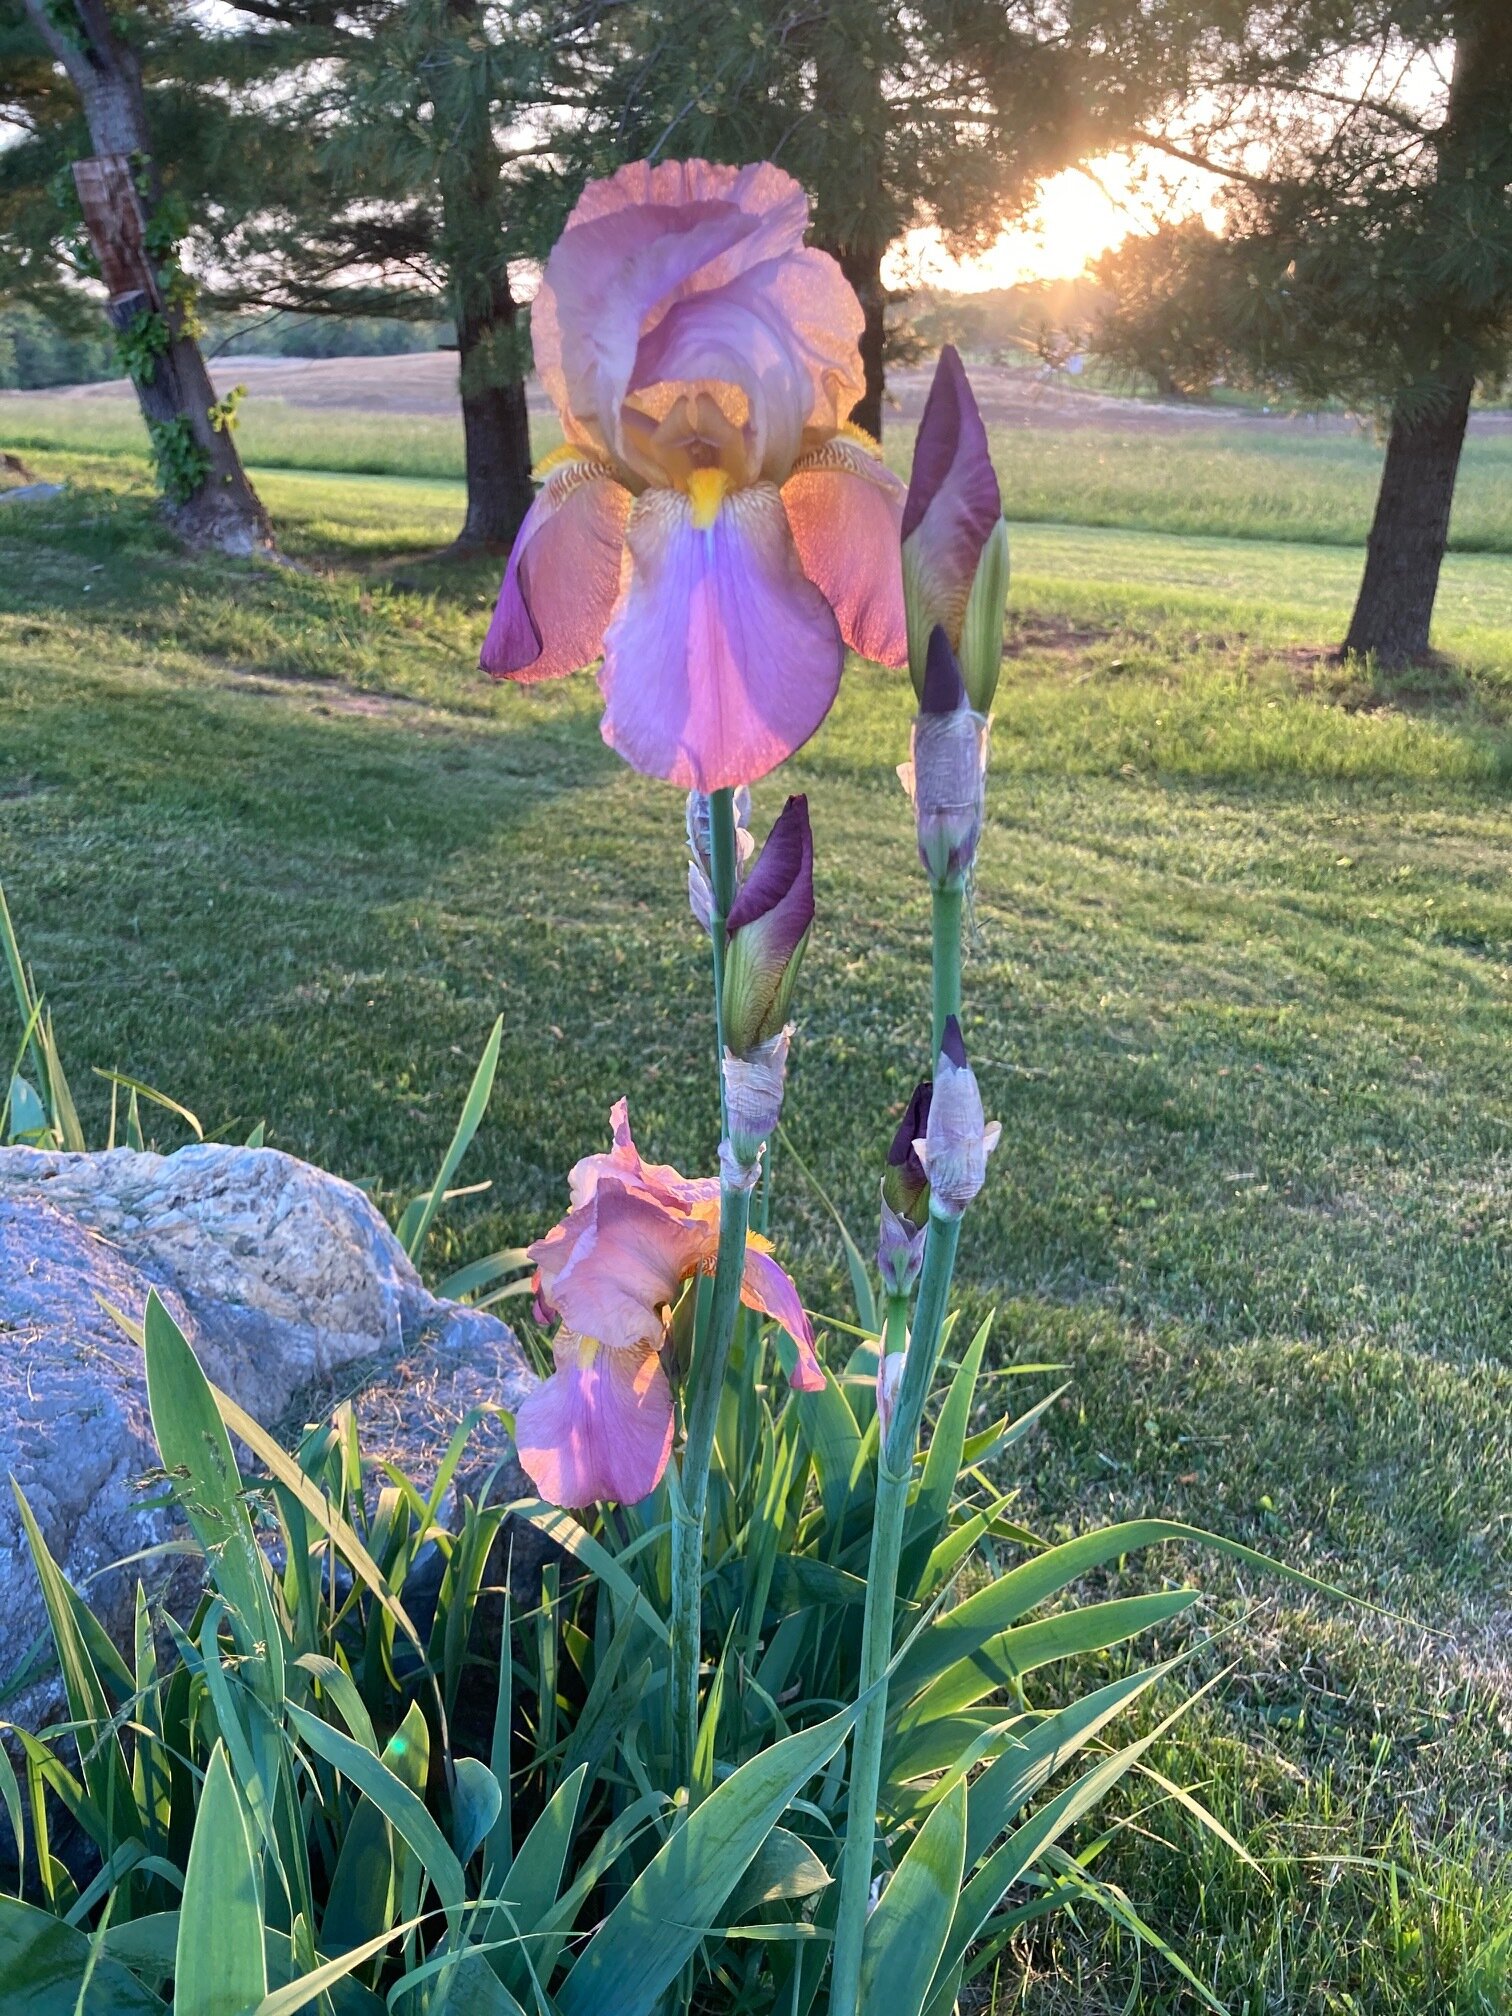 A neighbor's beautiful flower.